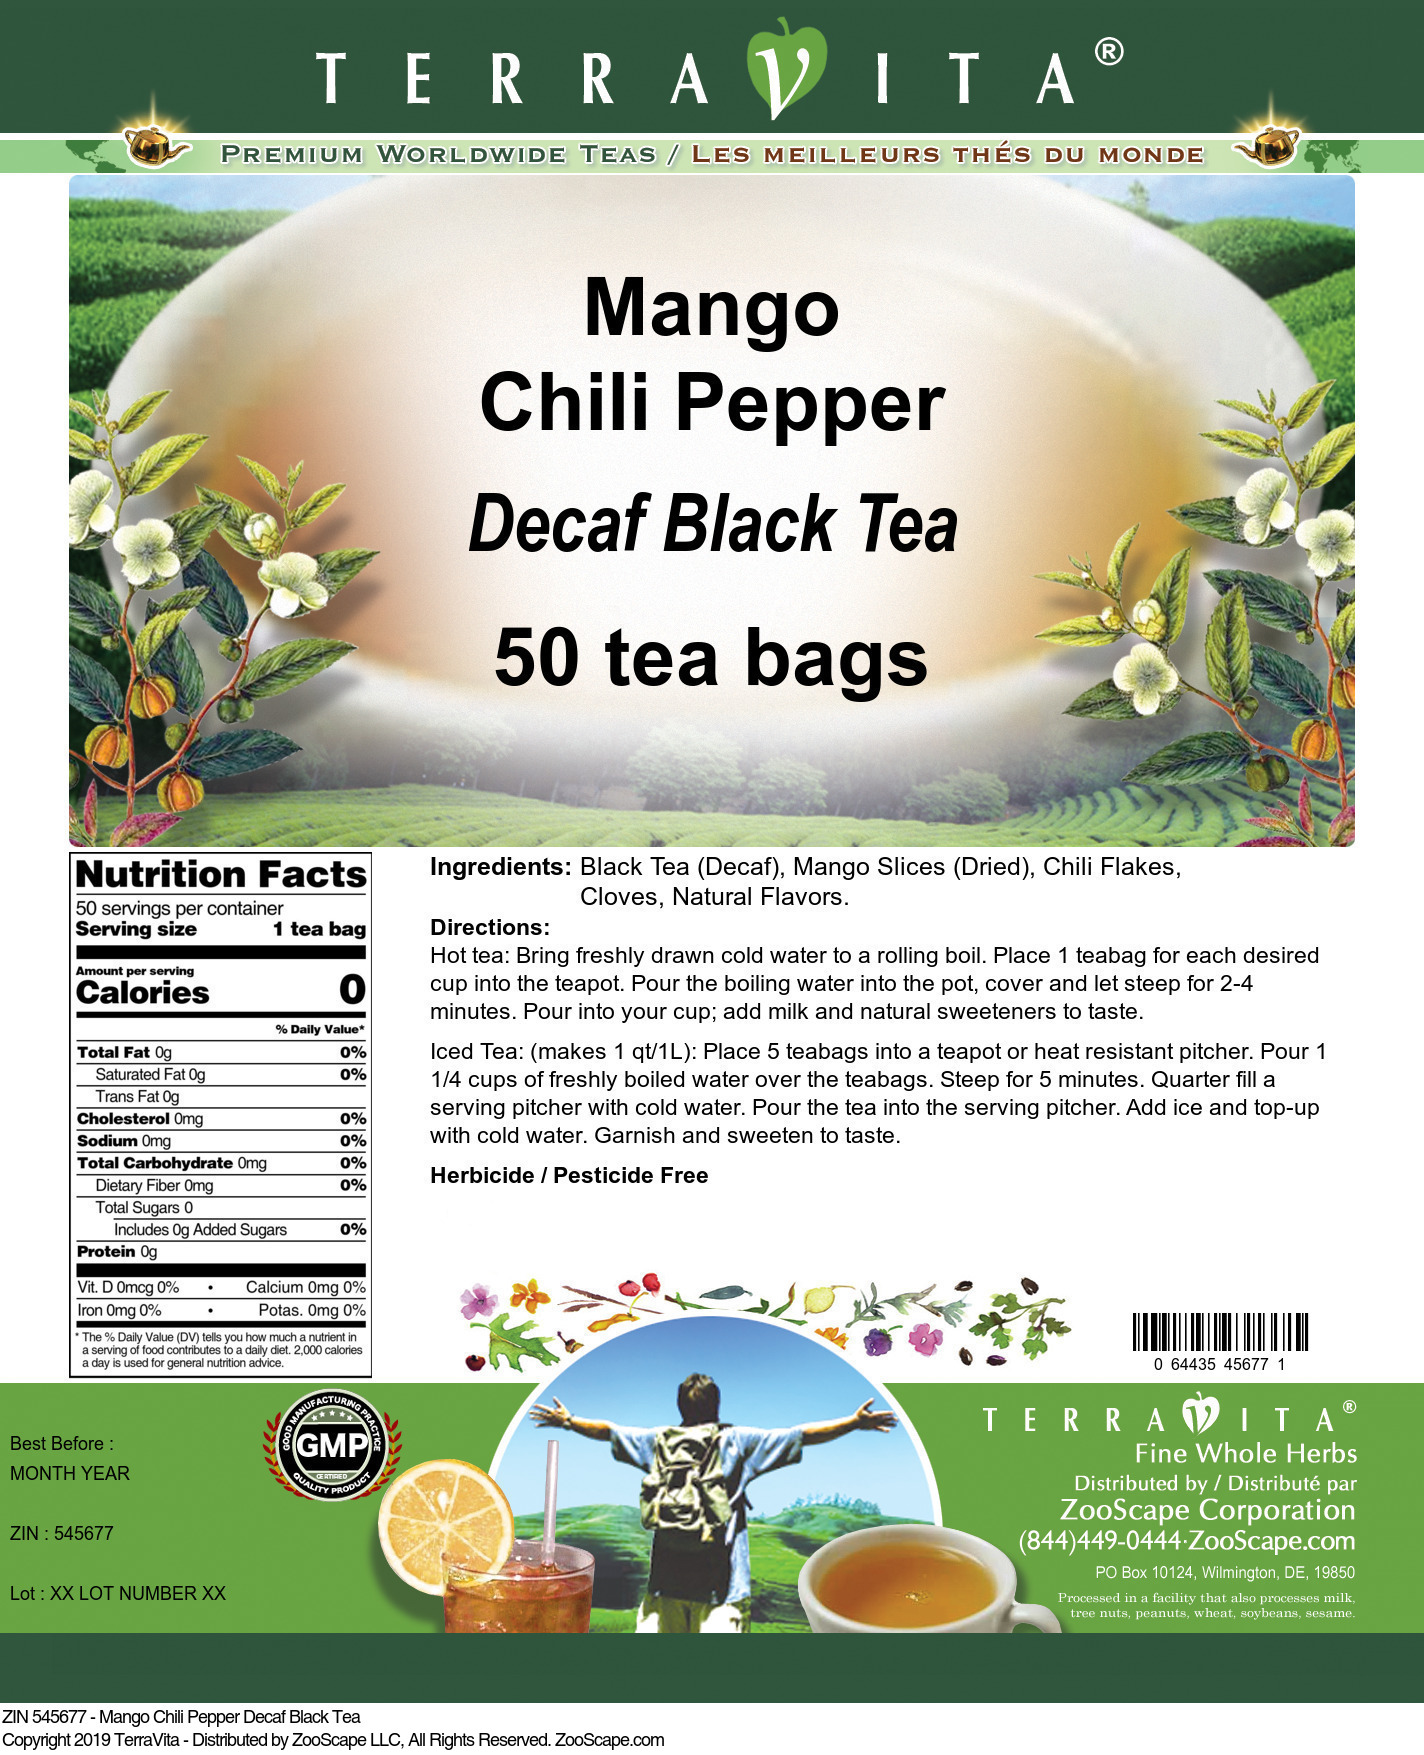 Mango Chili Pepper Decaf Black Tea - Label